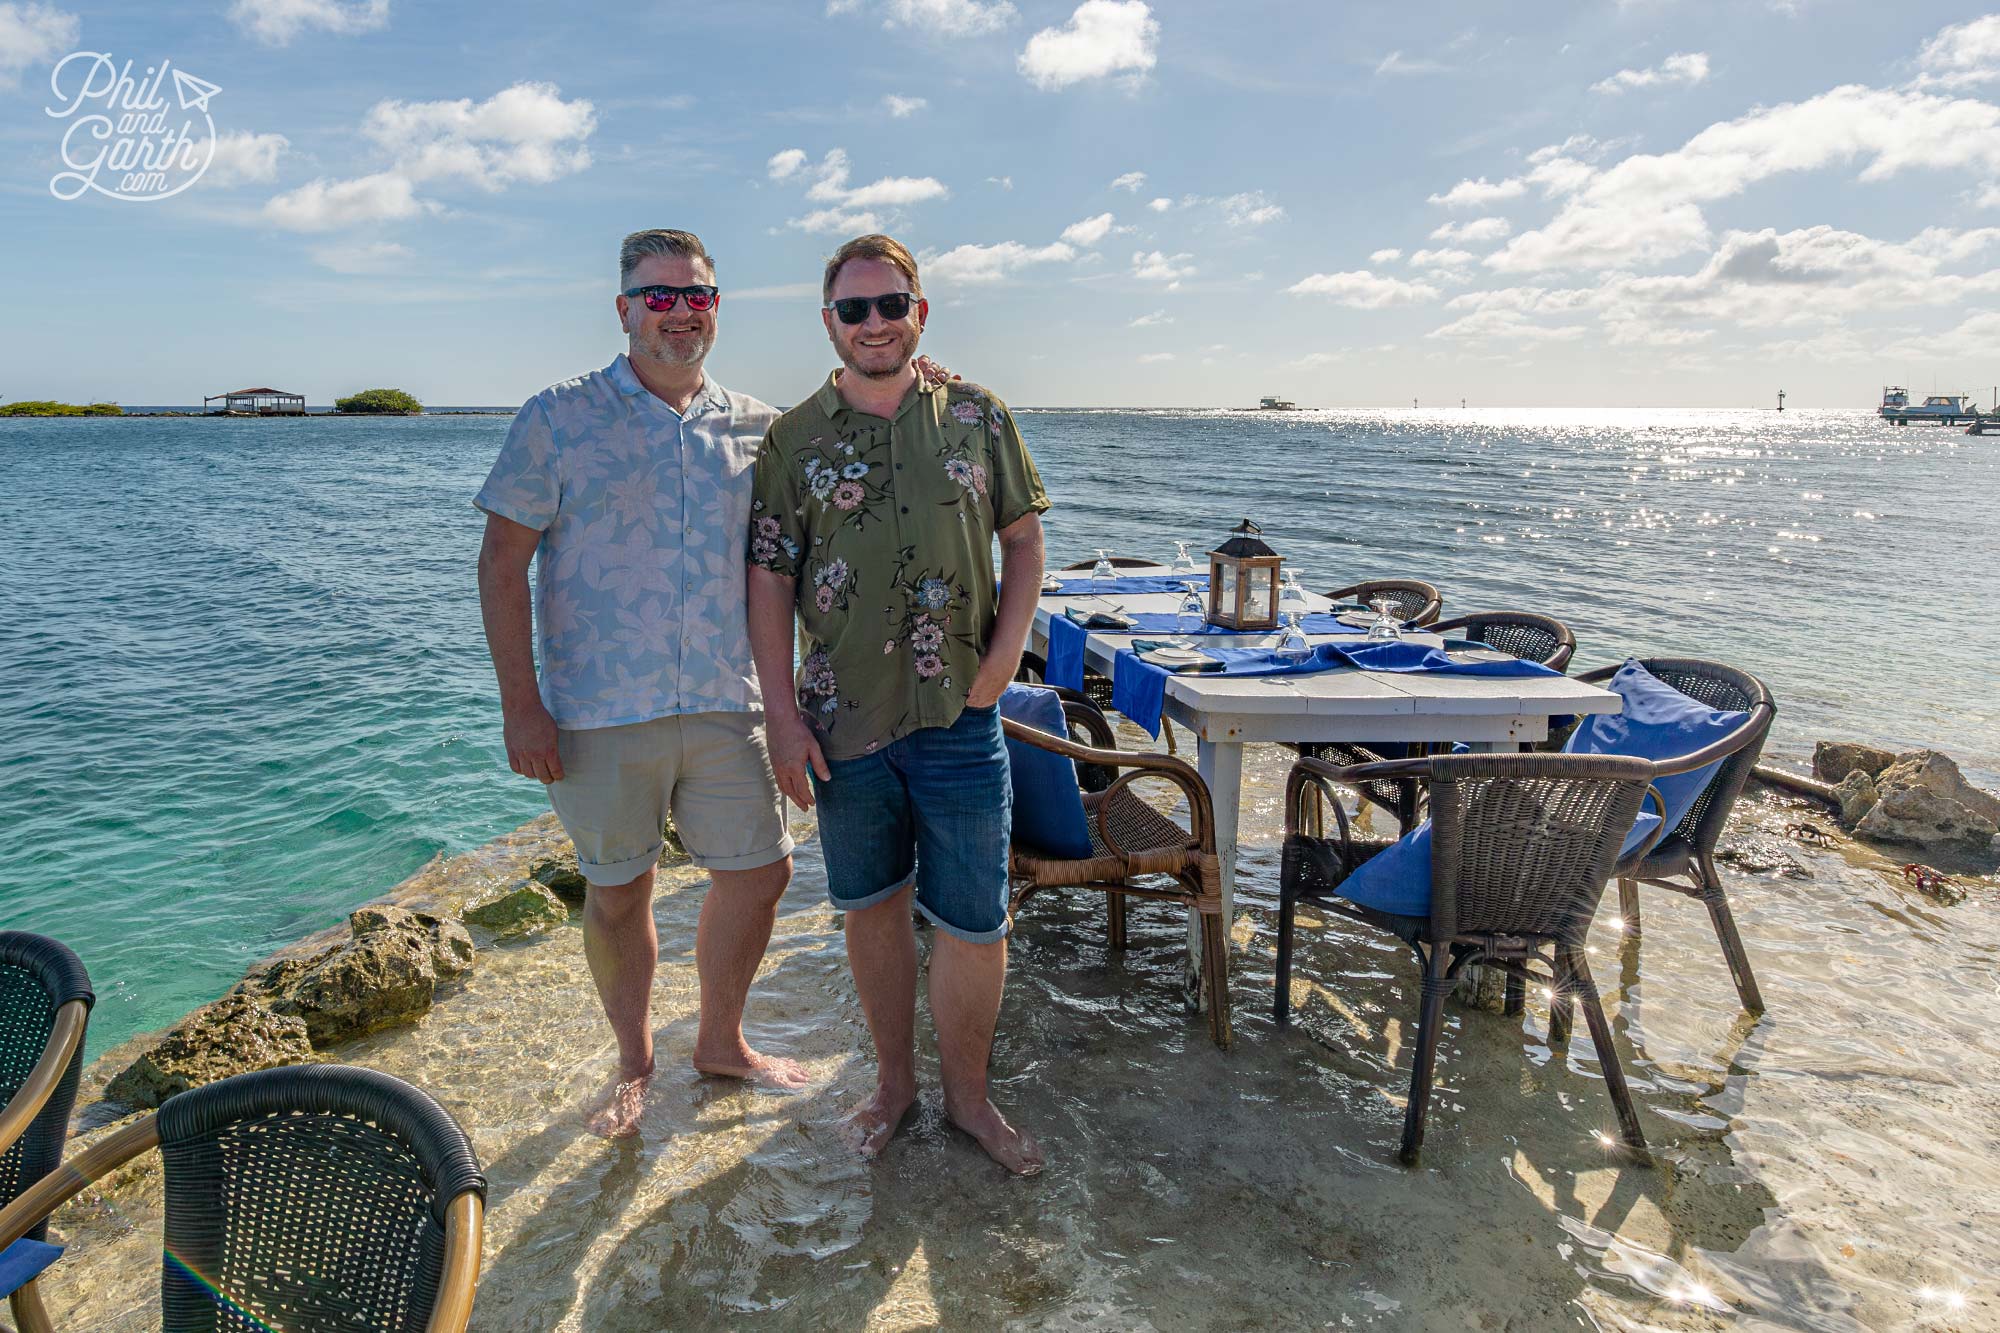 Phil and Garth at The Flying Fishbone Aruba